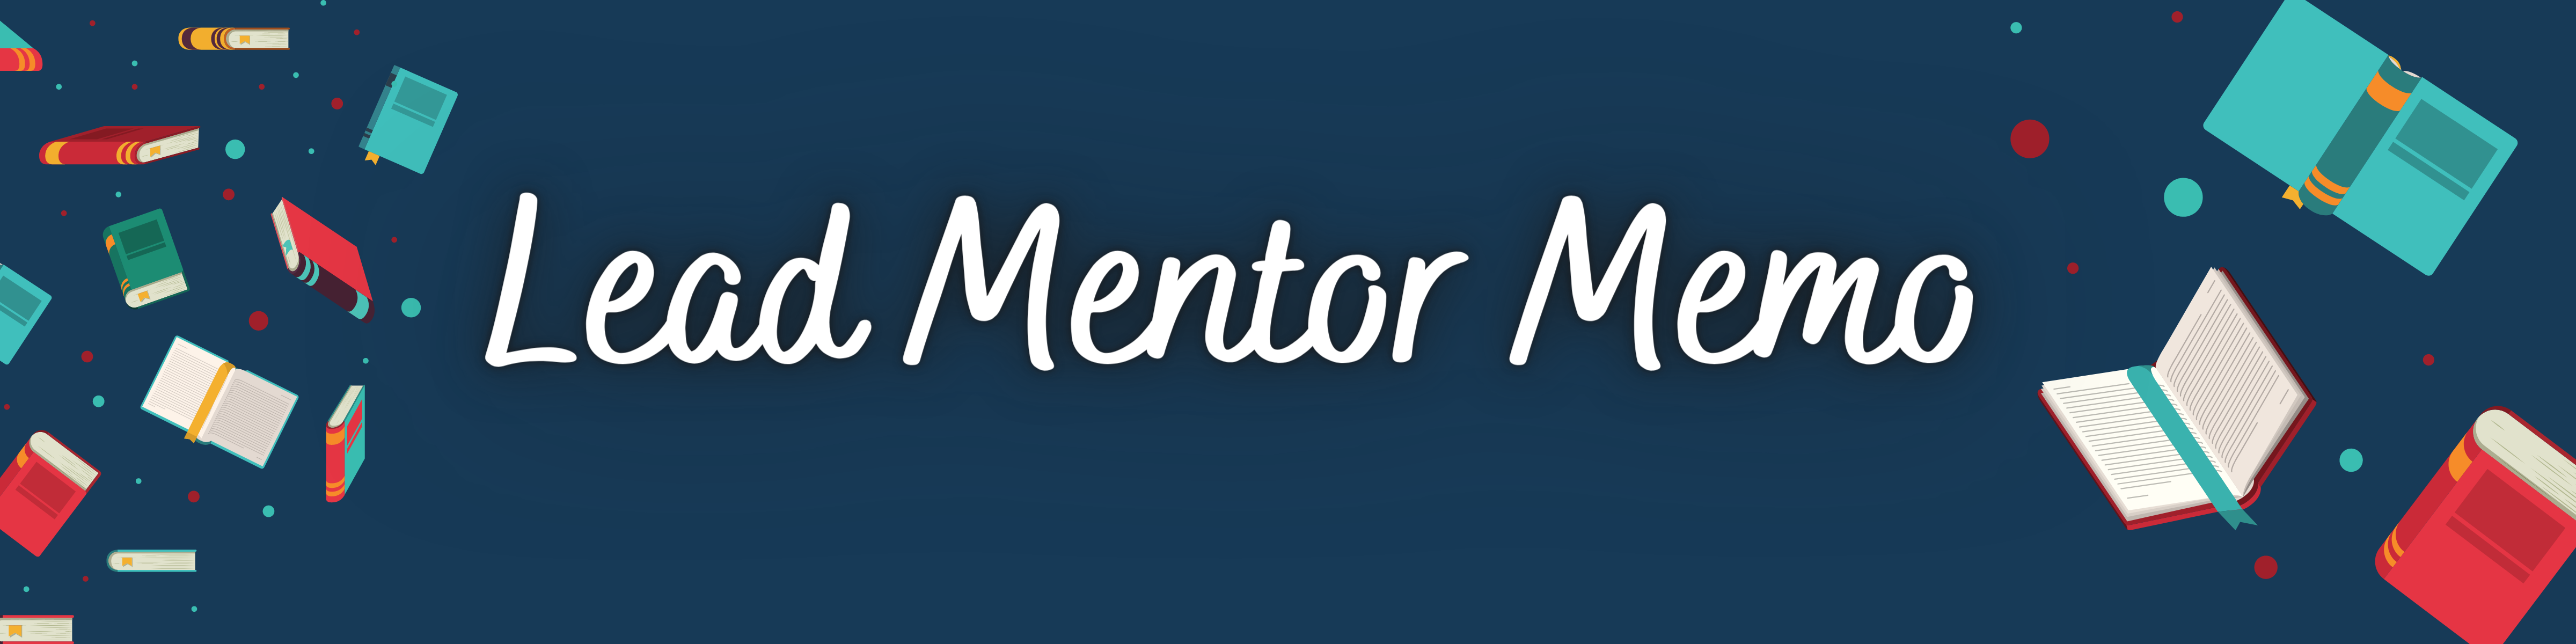 Lead Mentor Memo 